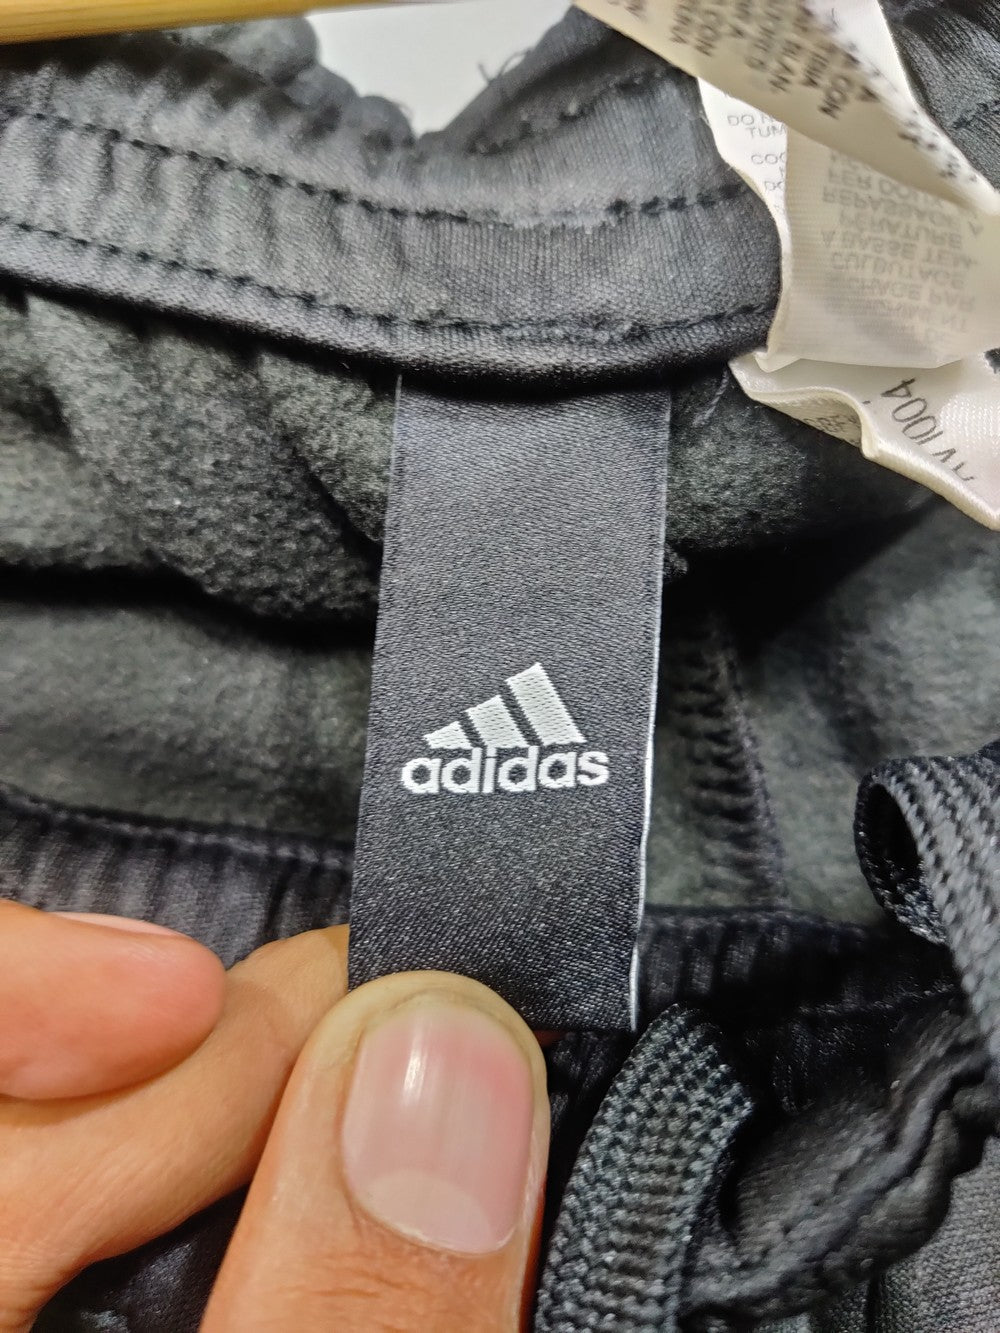 Adidas Branded Original Sports Winter Trouser For Men